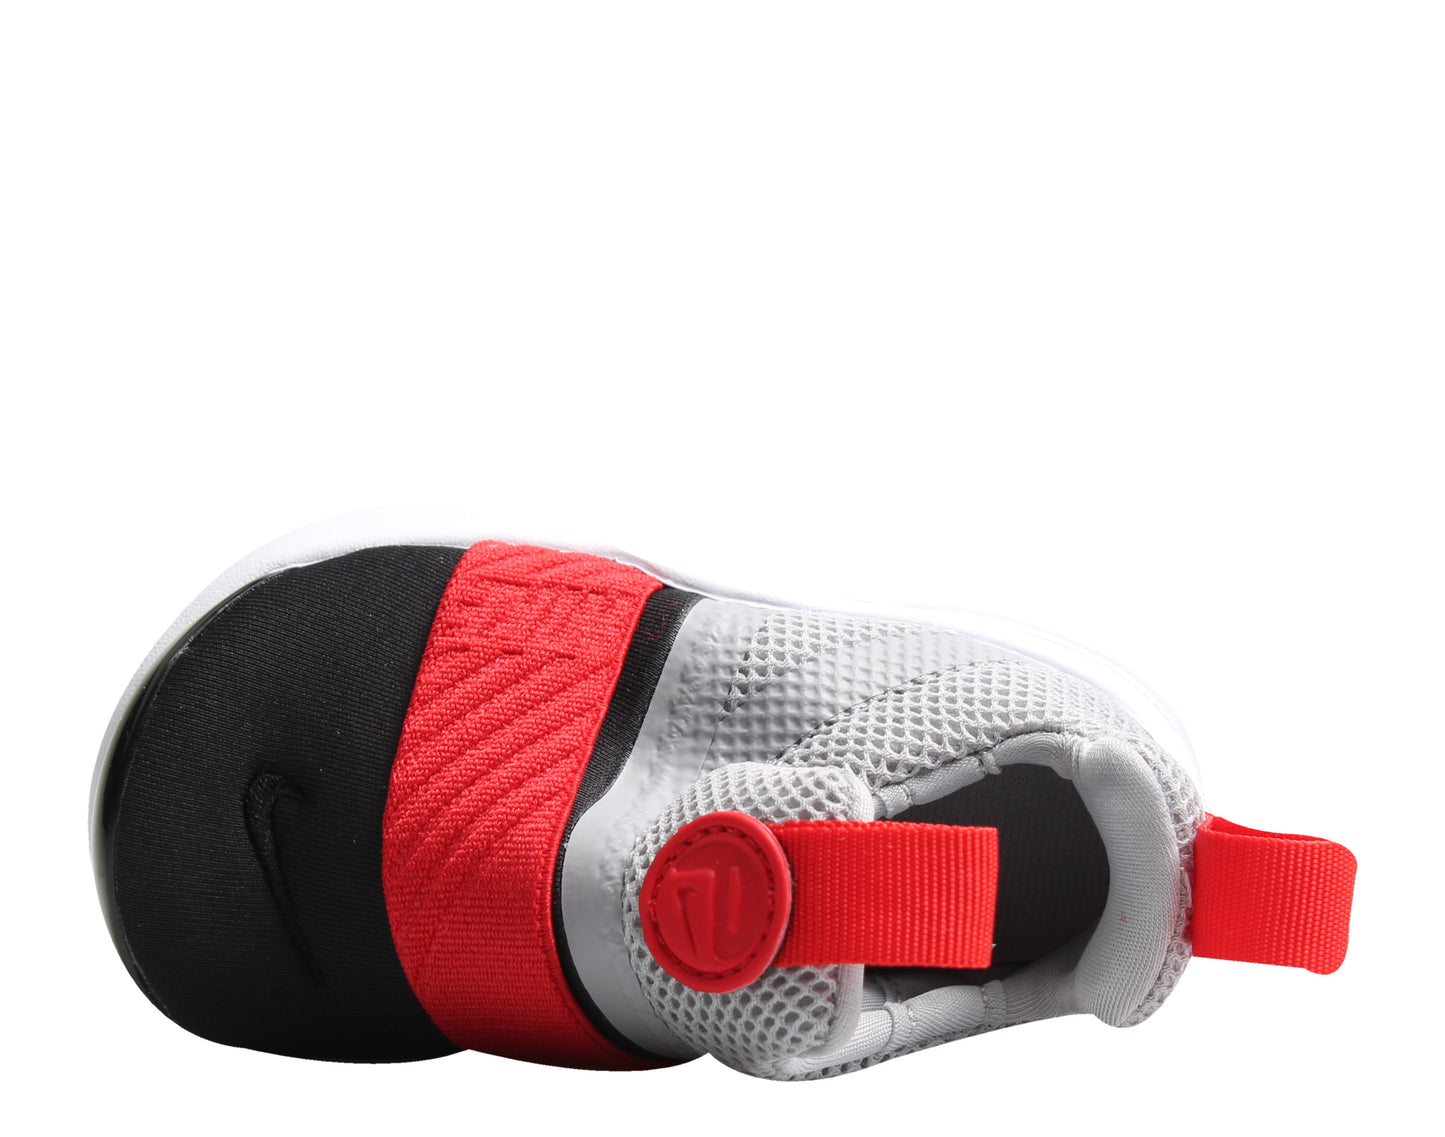 Nike Presto Extreme (TD) Grey/Red-Black Big Little Kids Running Shoes 870019-009